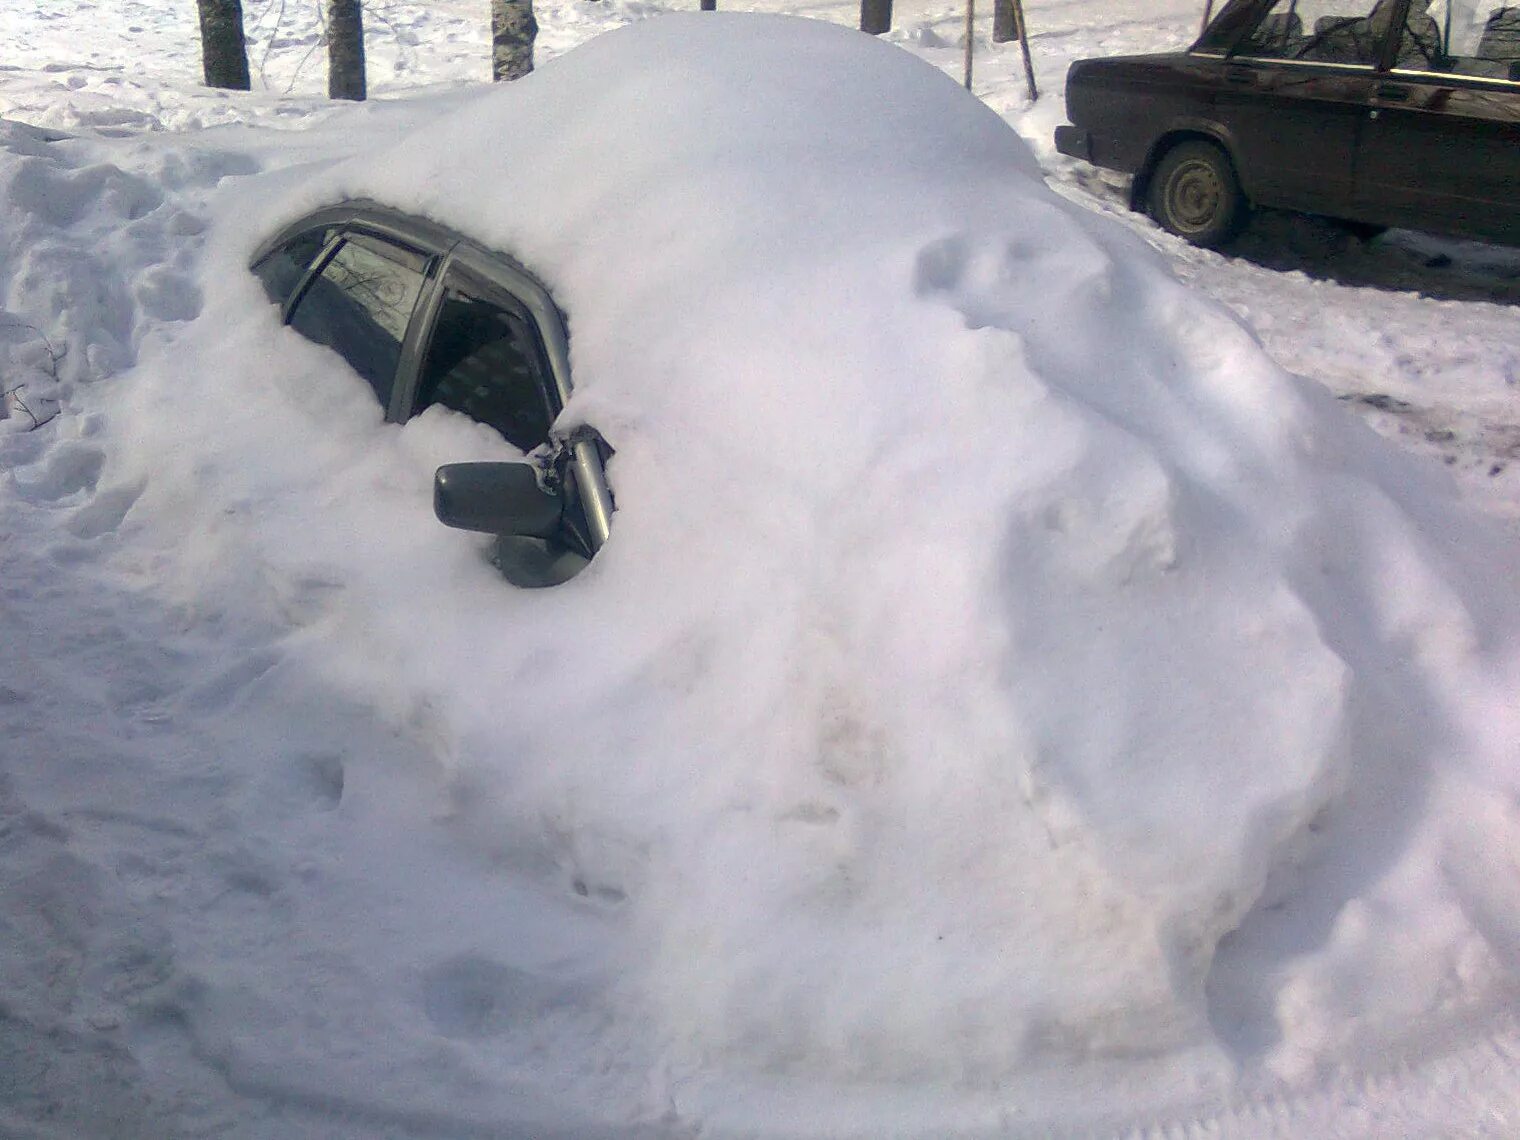 Откопала или откапала. Машина под сугробом. Машина под снегом. Машина в сугробе. Машину занесло снегом.